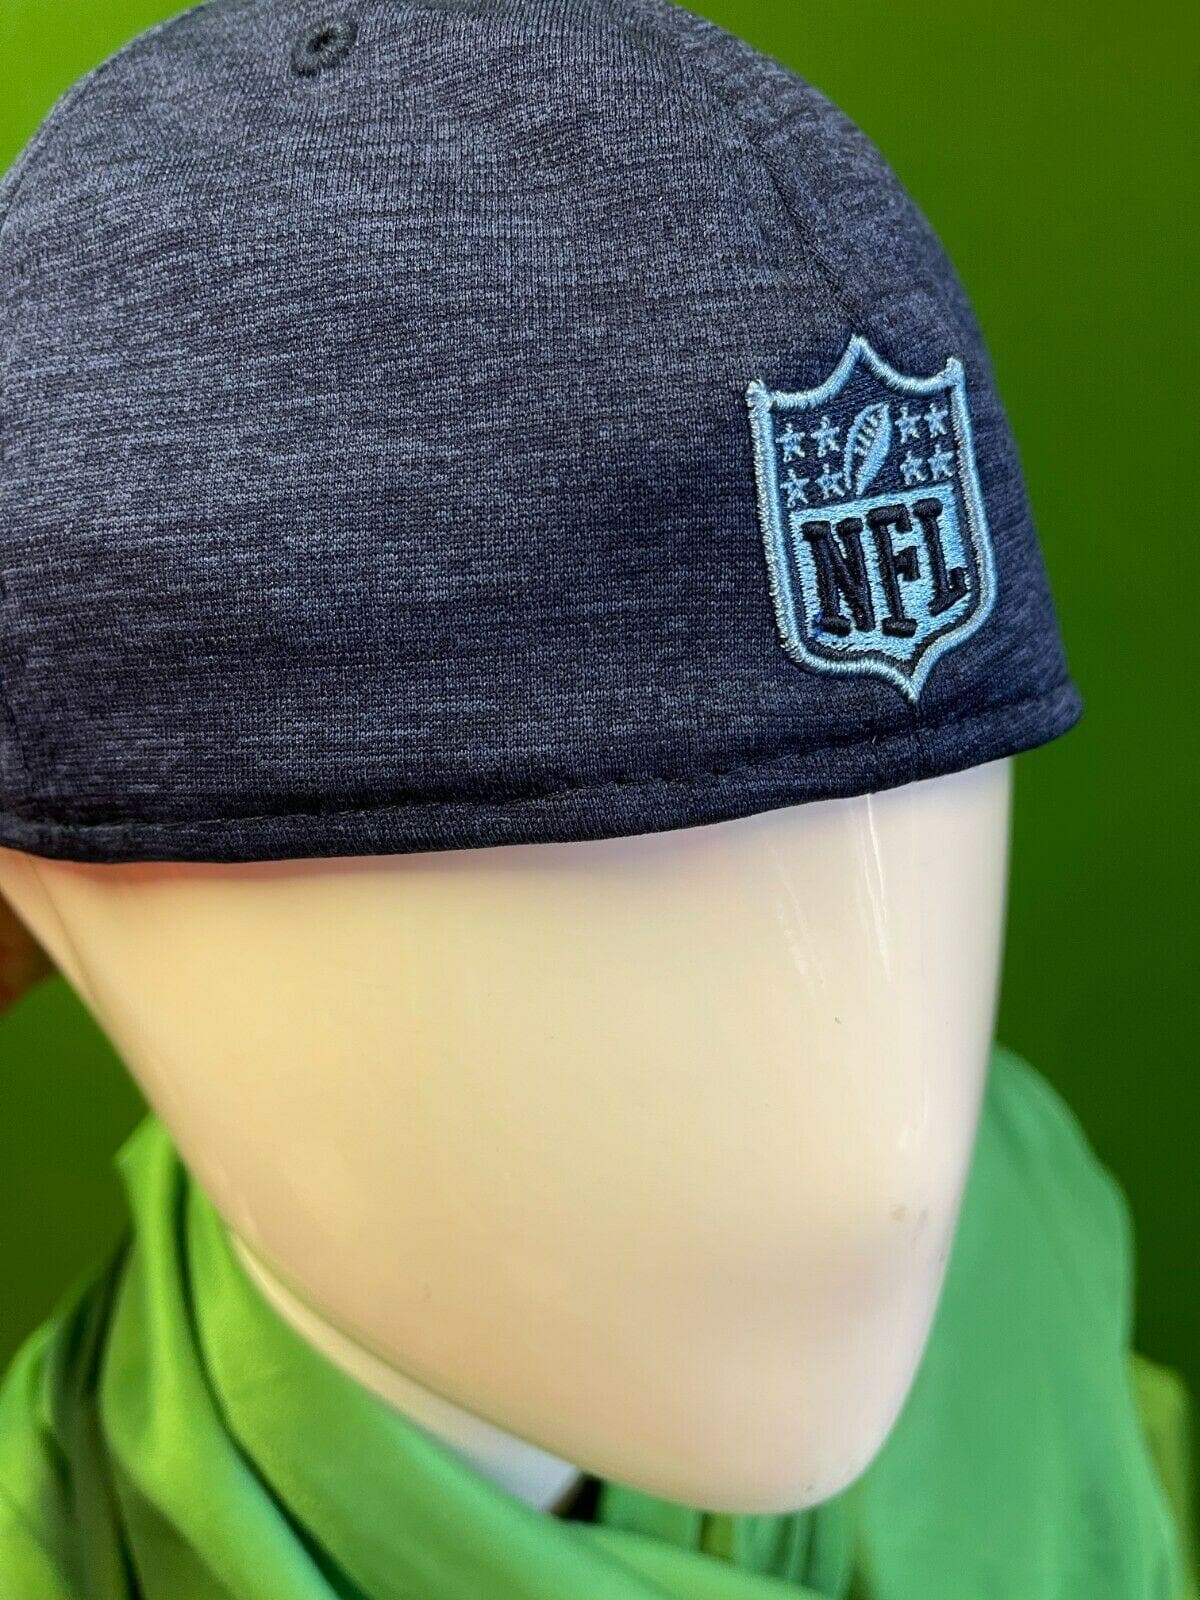 NFL Tennessee Titans New Era 39THIRTY Hat-Cap Small-Medium NWT